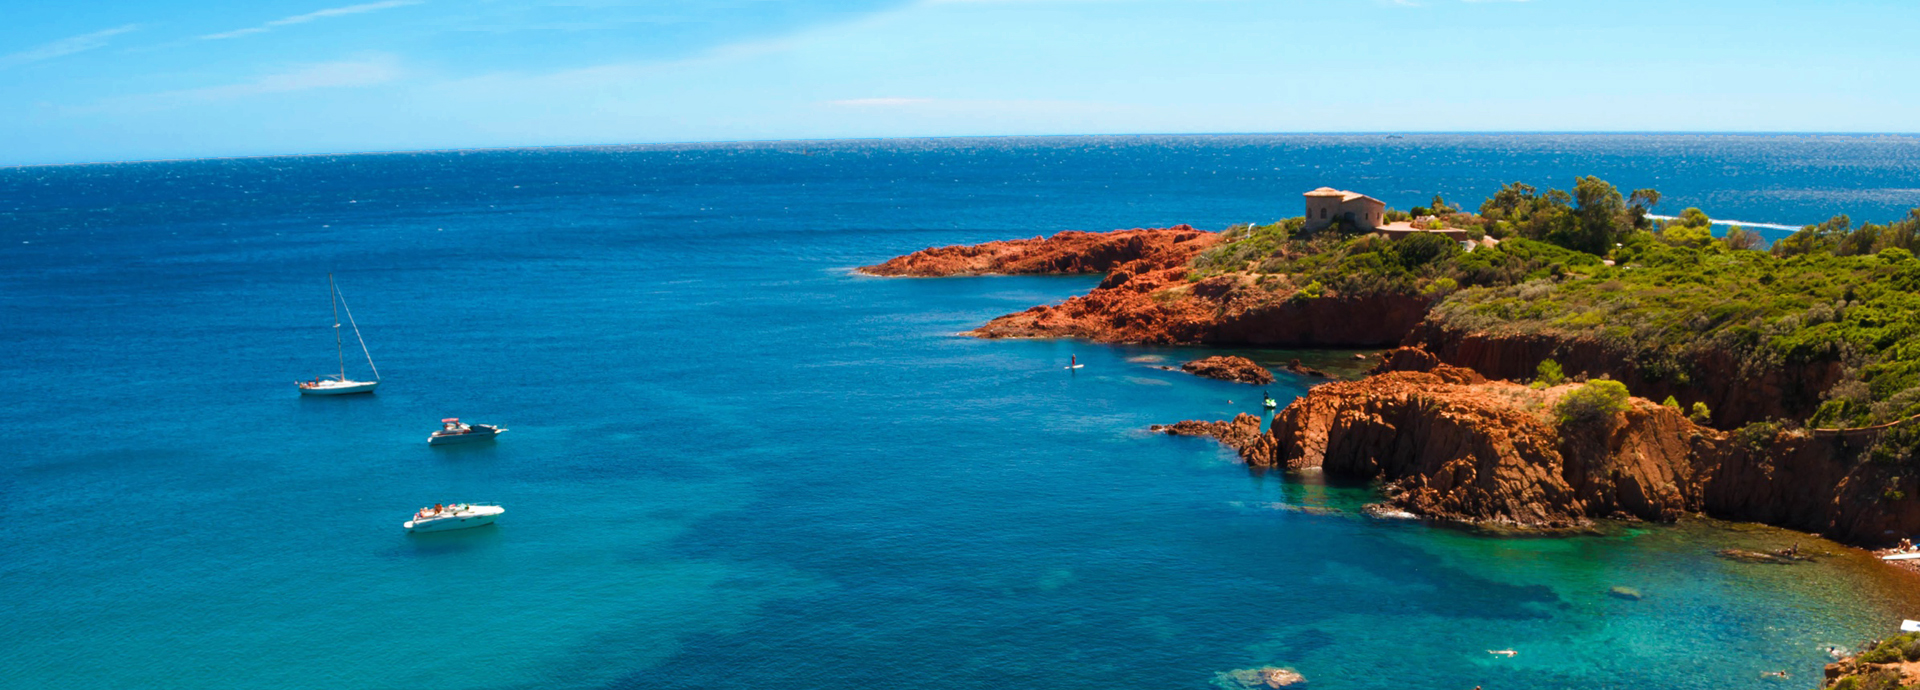 Coralia Vacances : location vacances au bord de la mer Méditerranée